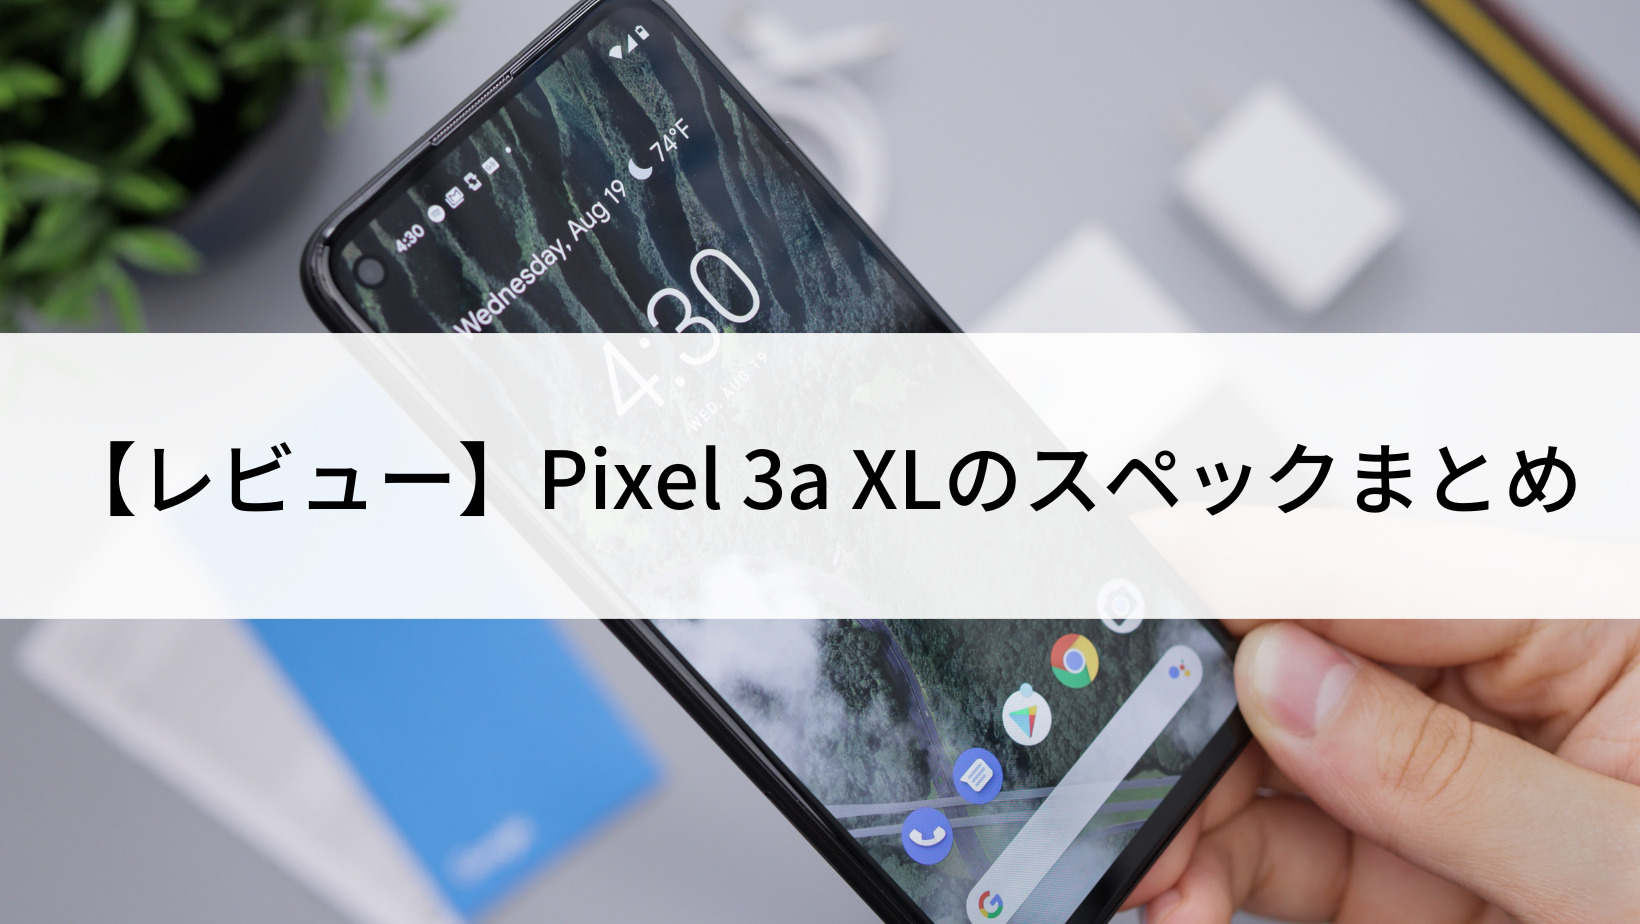 pixel 3a XL